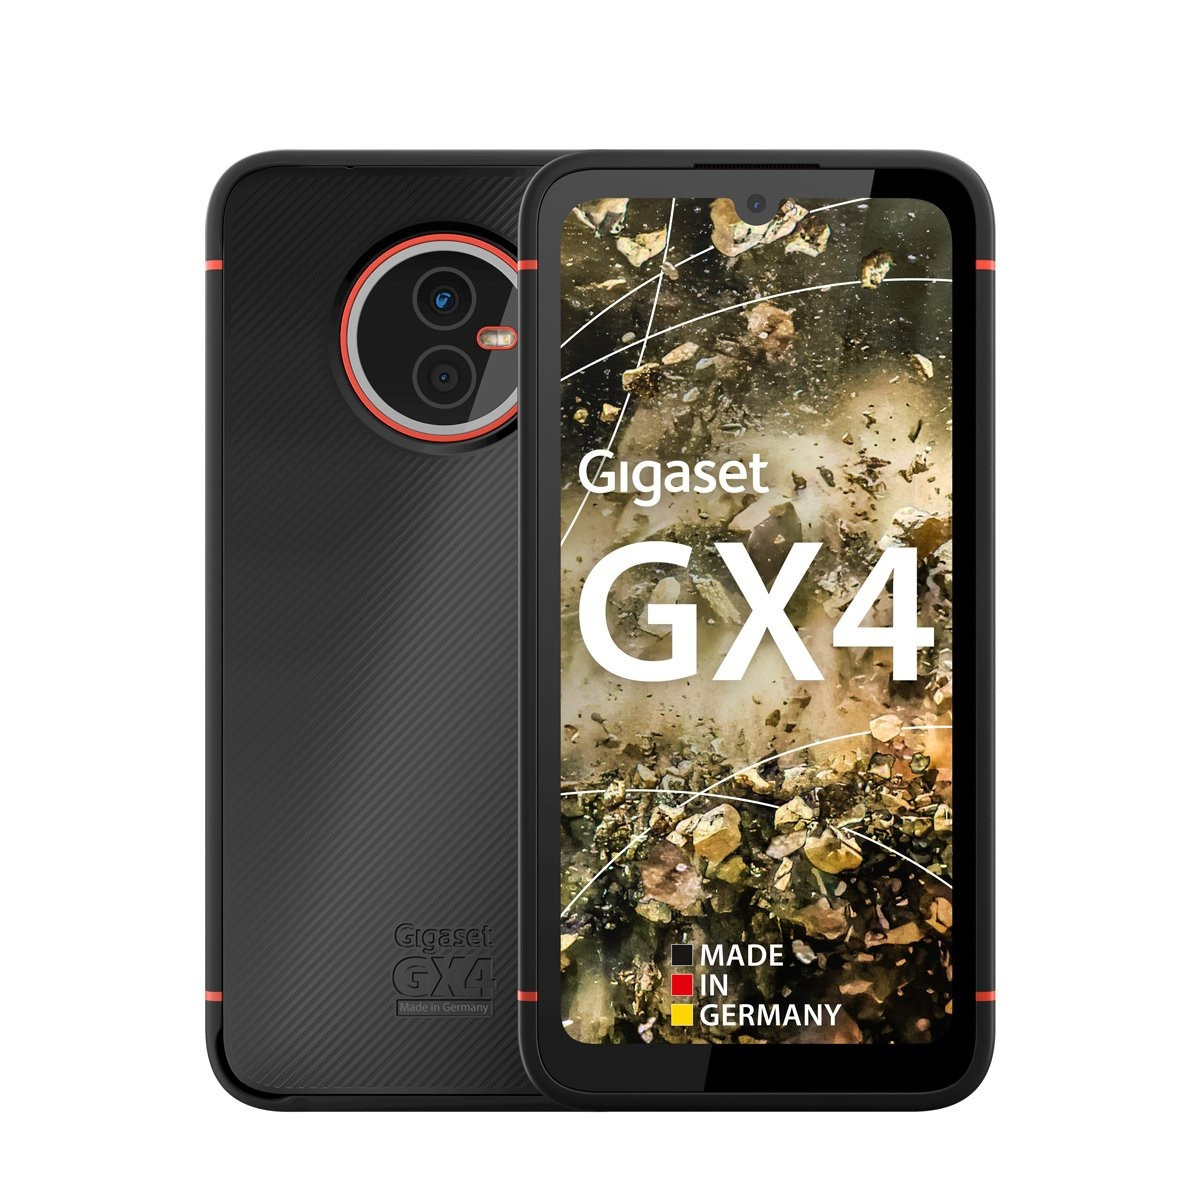 Gigaset GX4 - 64GB Smartphone Zwart